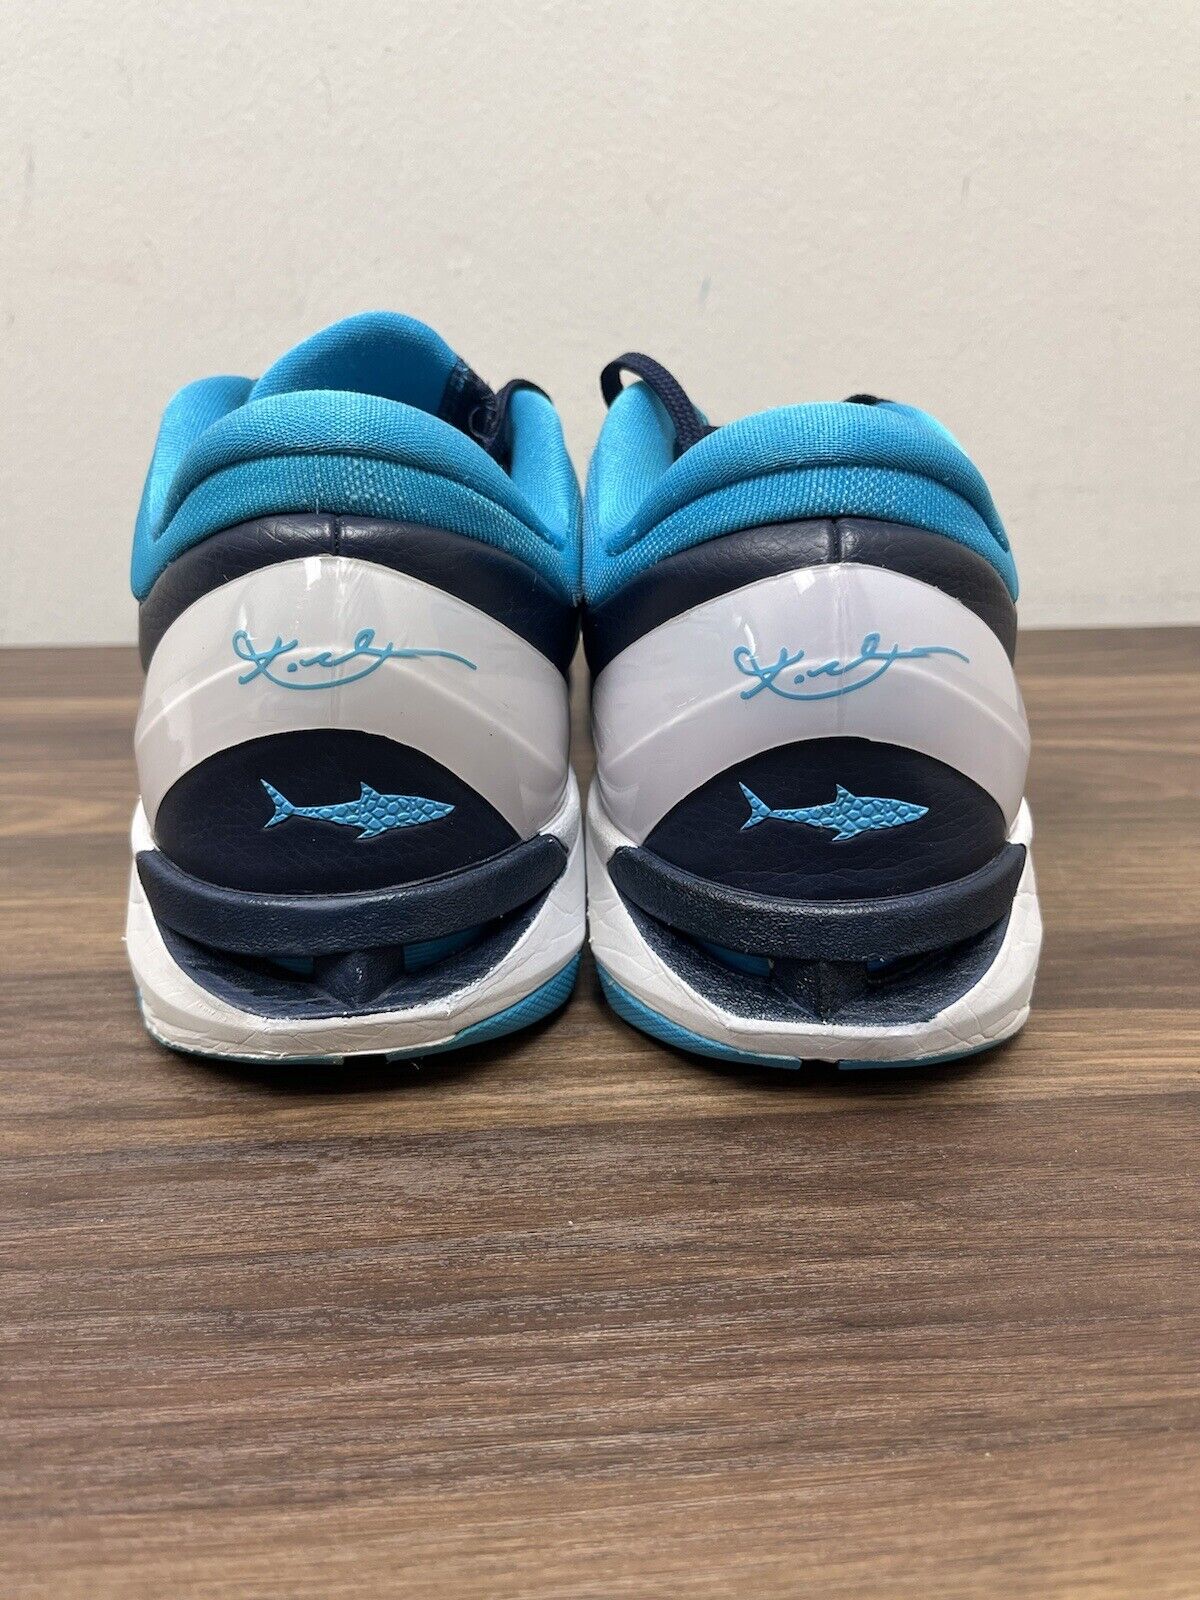 Nike Kobe 7 Shark 2012 Size 11 488371-401